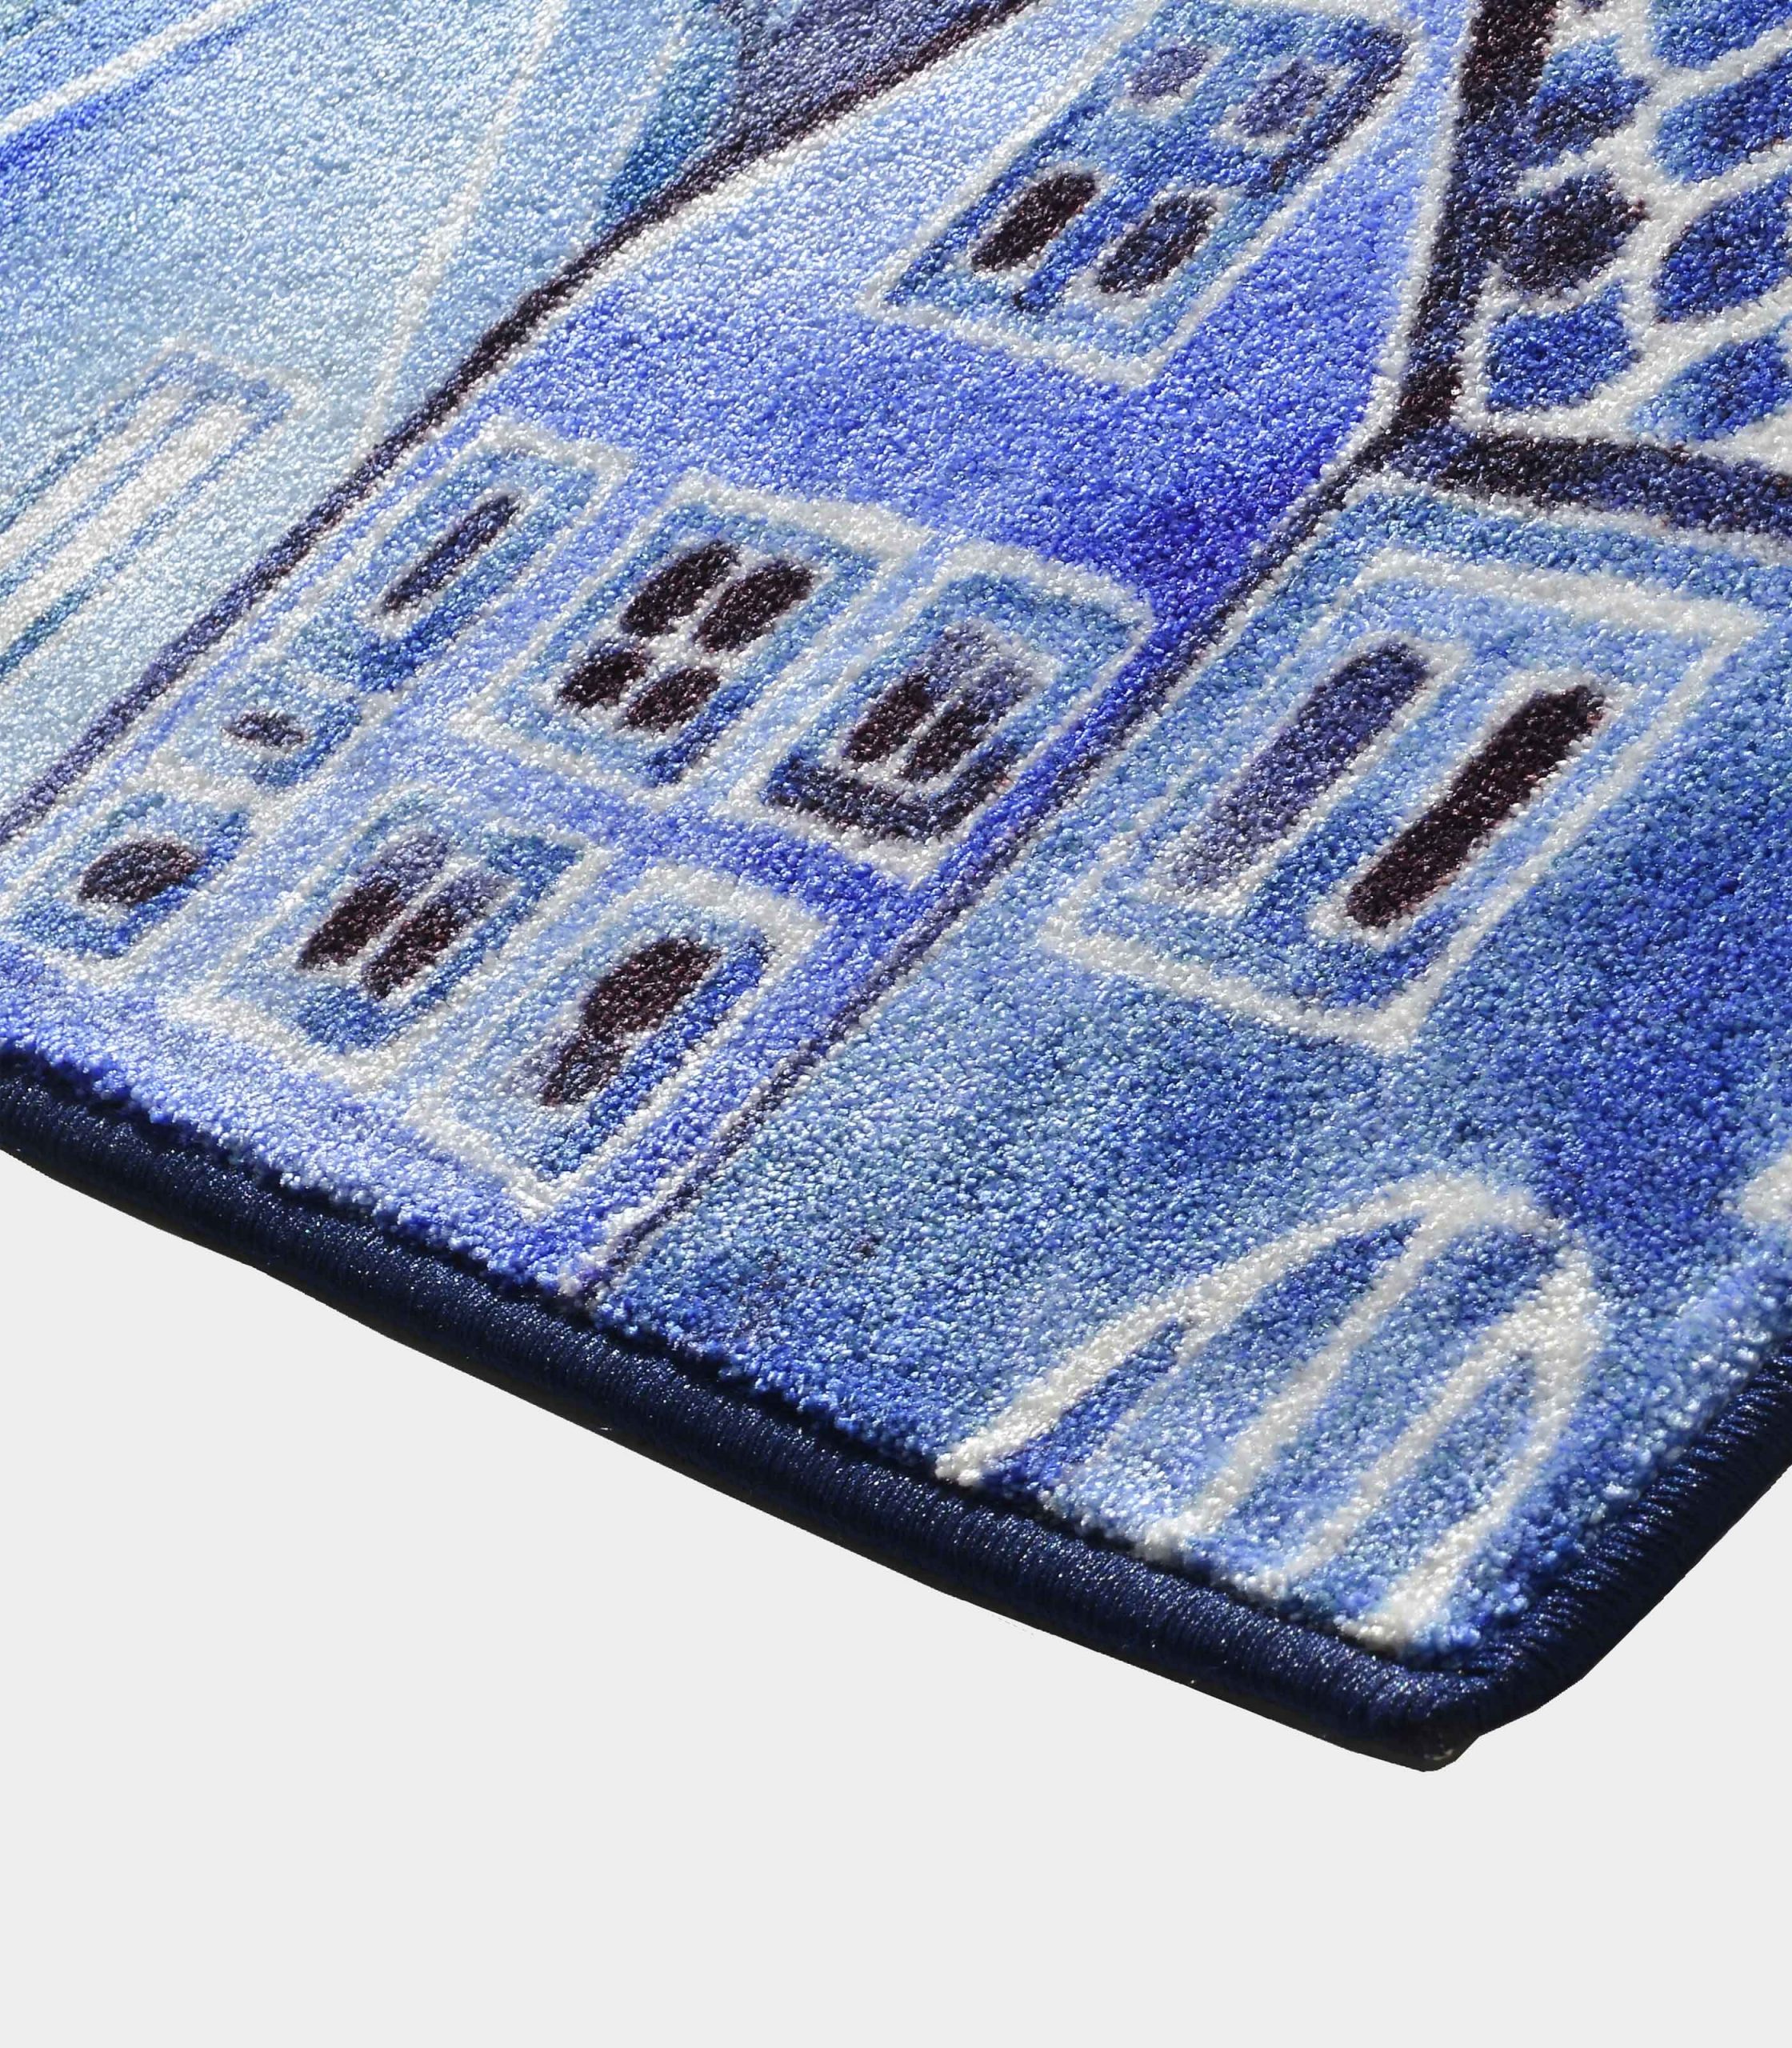 Blue "Notturno" fabric rug with printed designs loopo milano design C